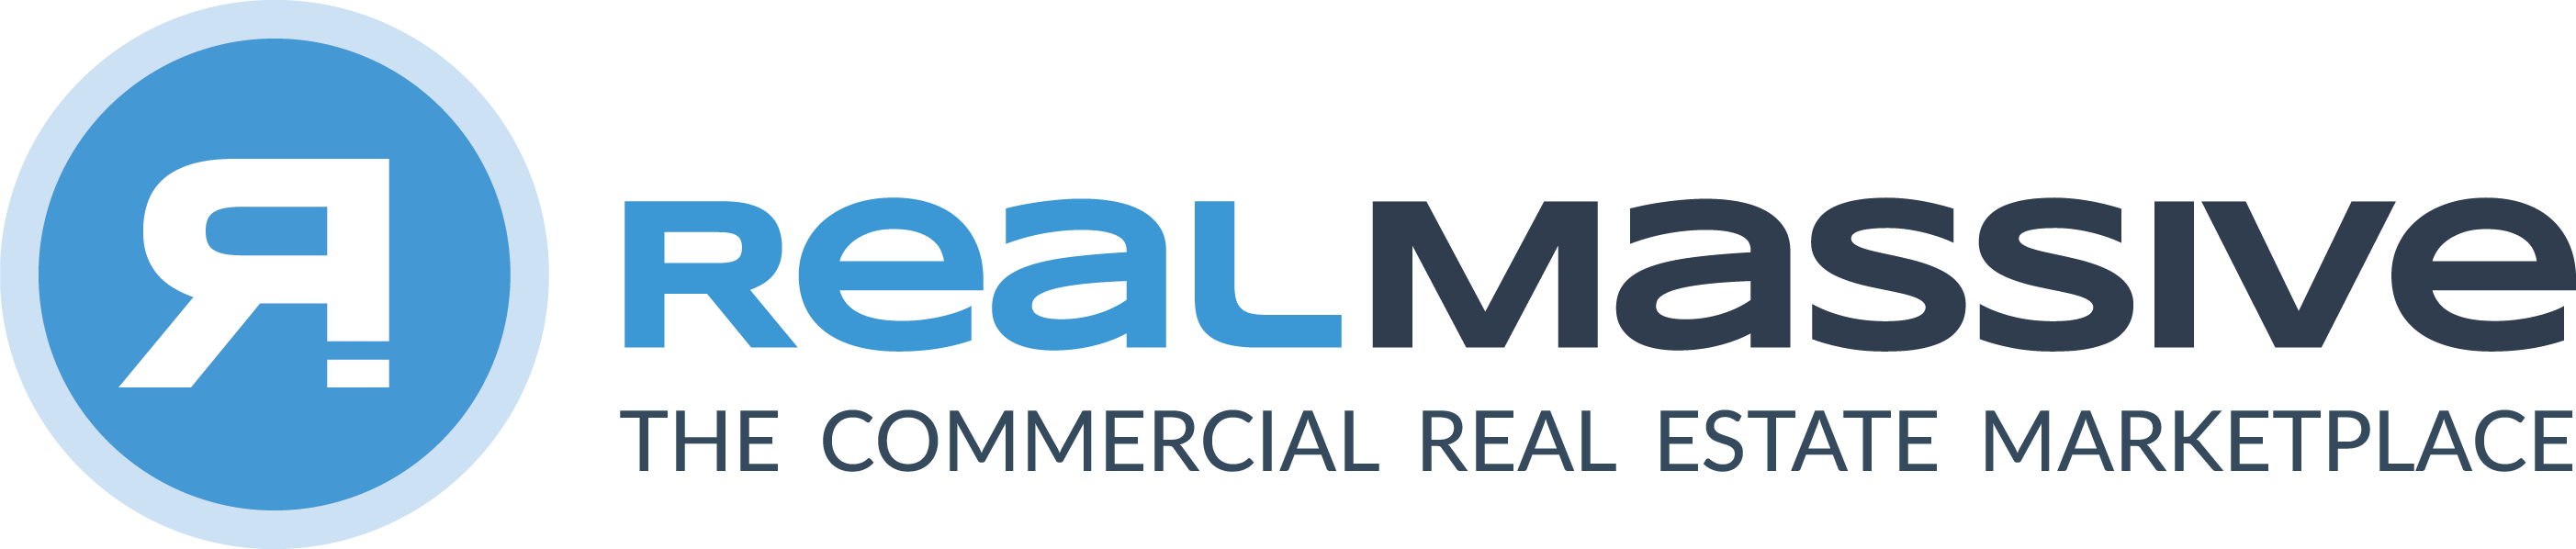 RealMassive-Logo